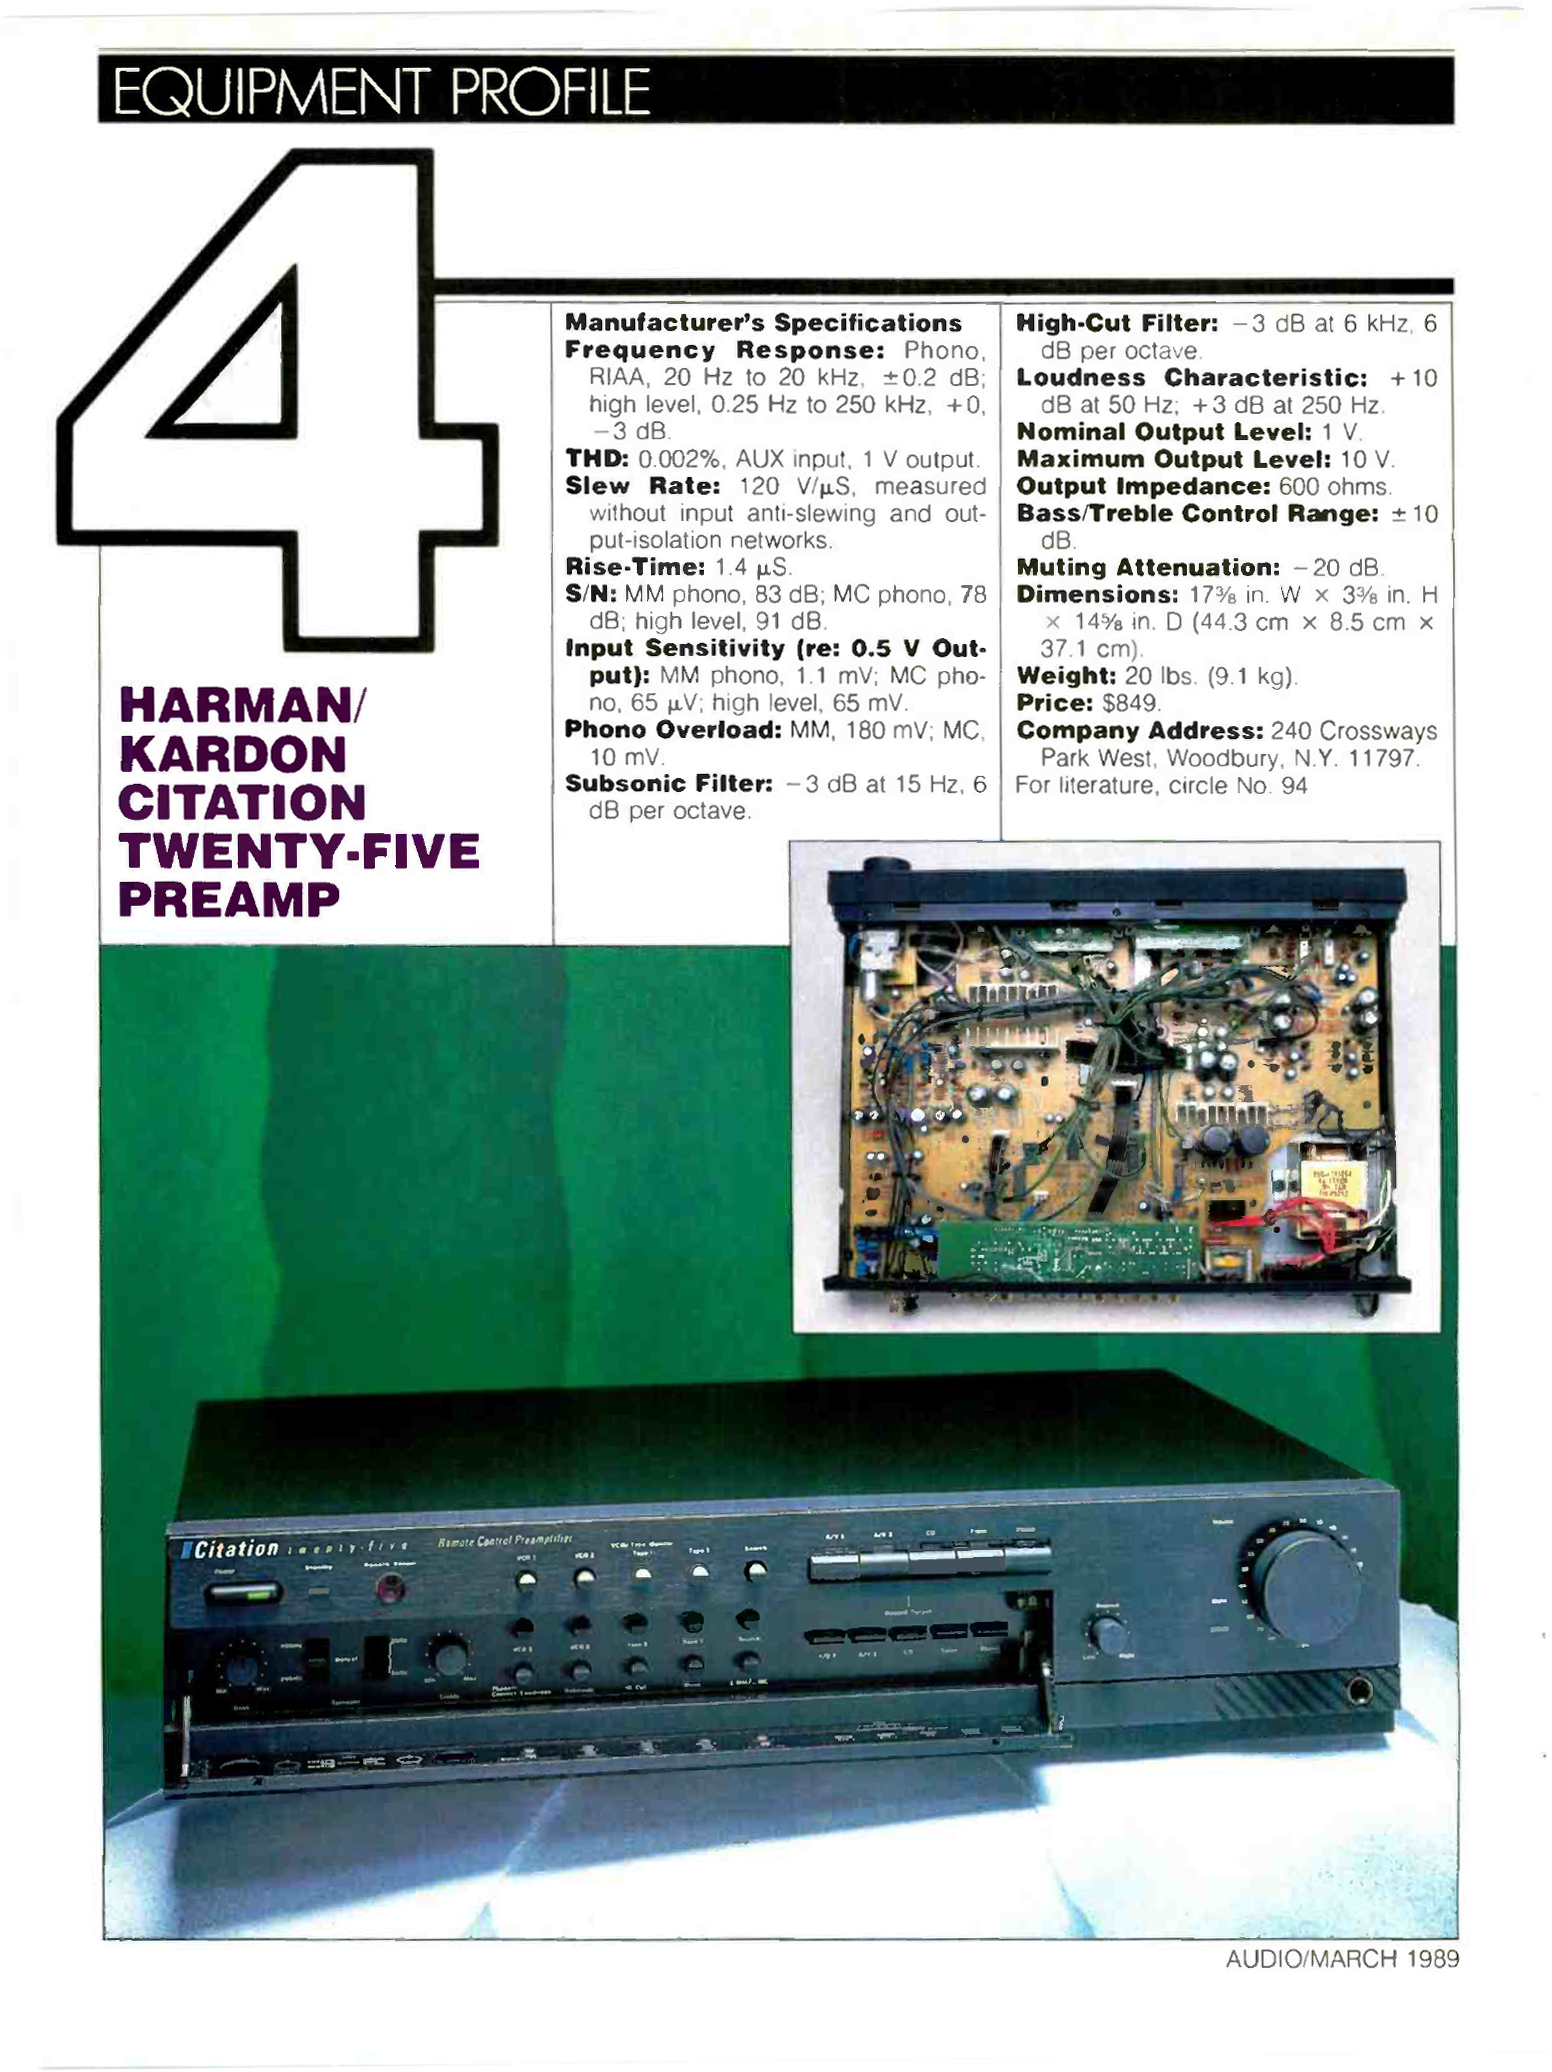 Harman Kardon Citation 25-Werbung-1989.jpg